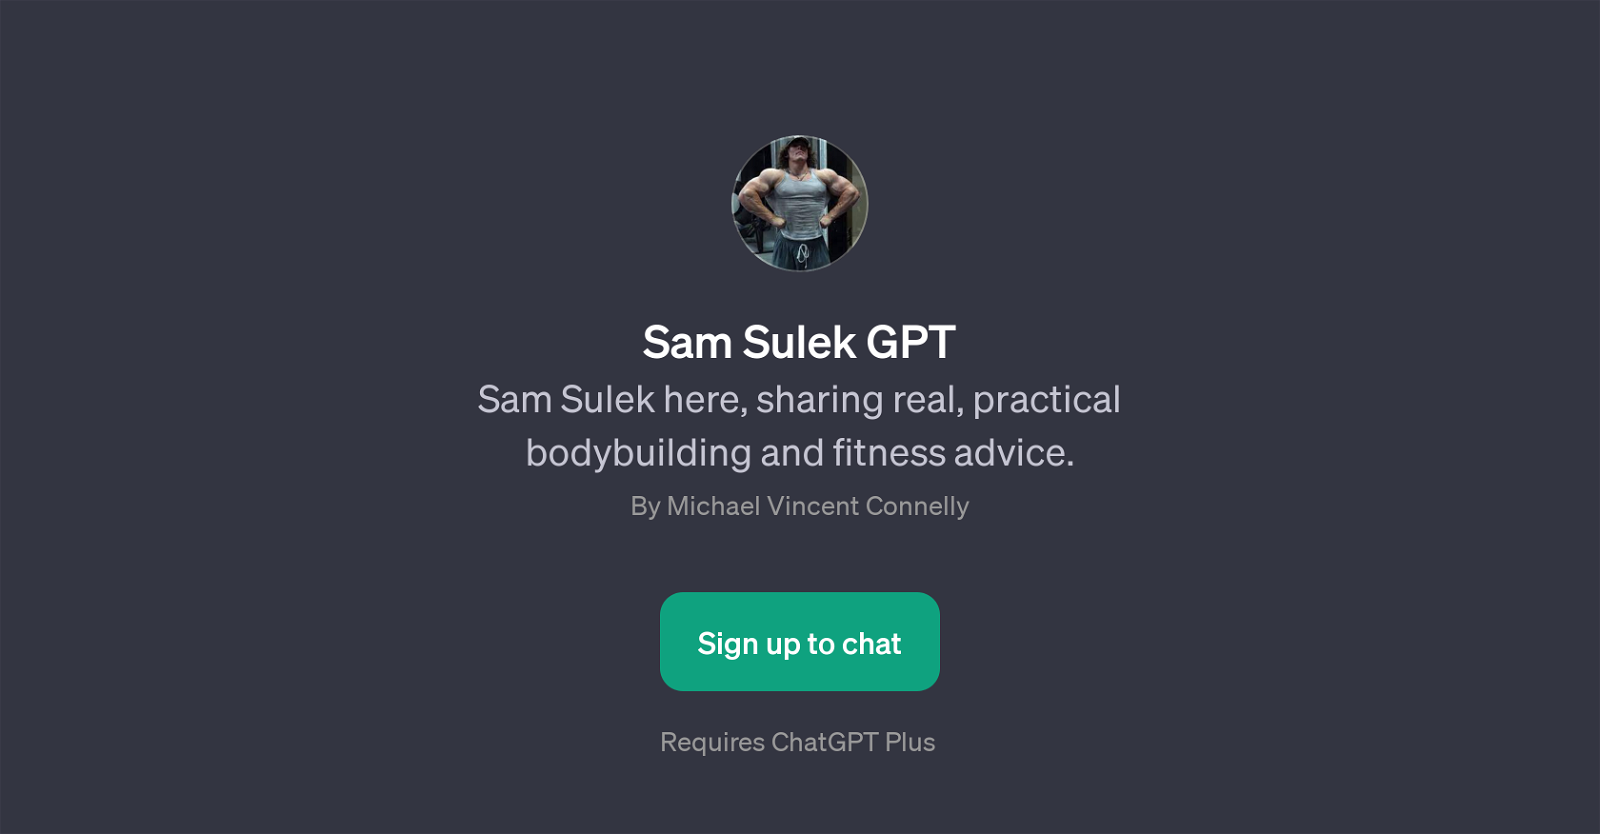 Sam Sulek GPT website